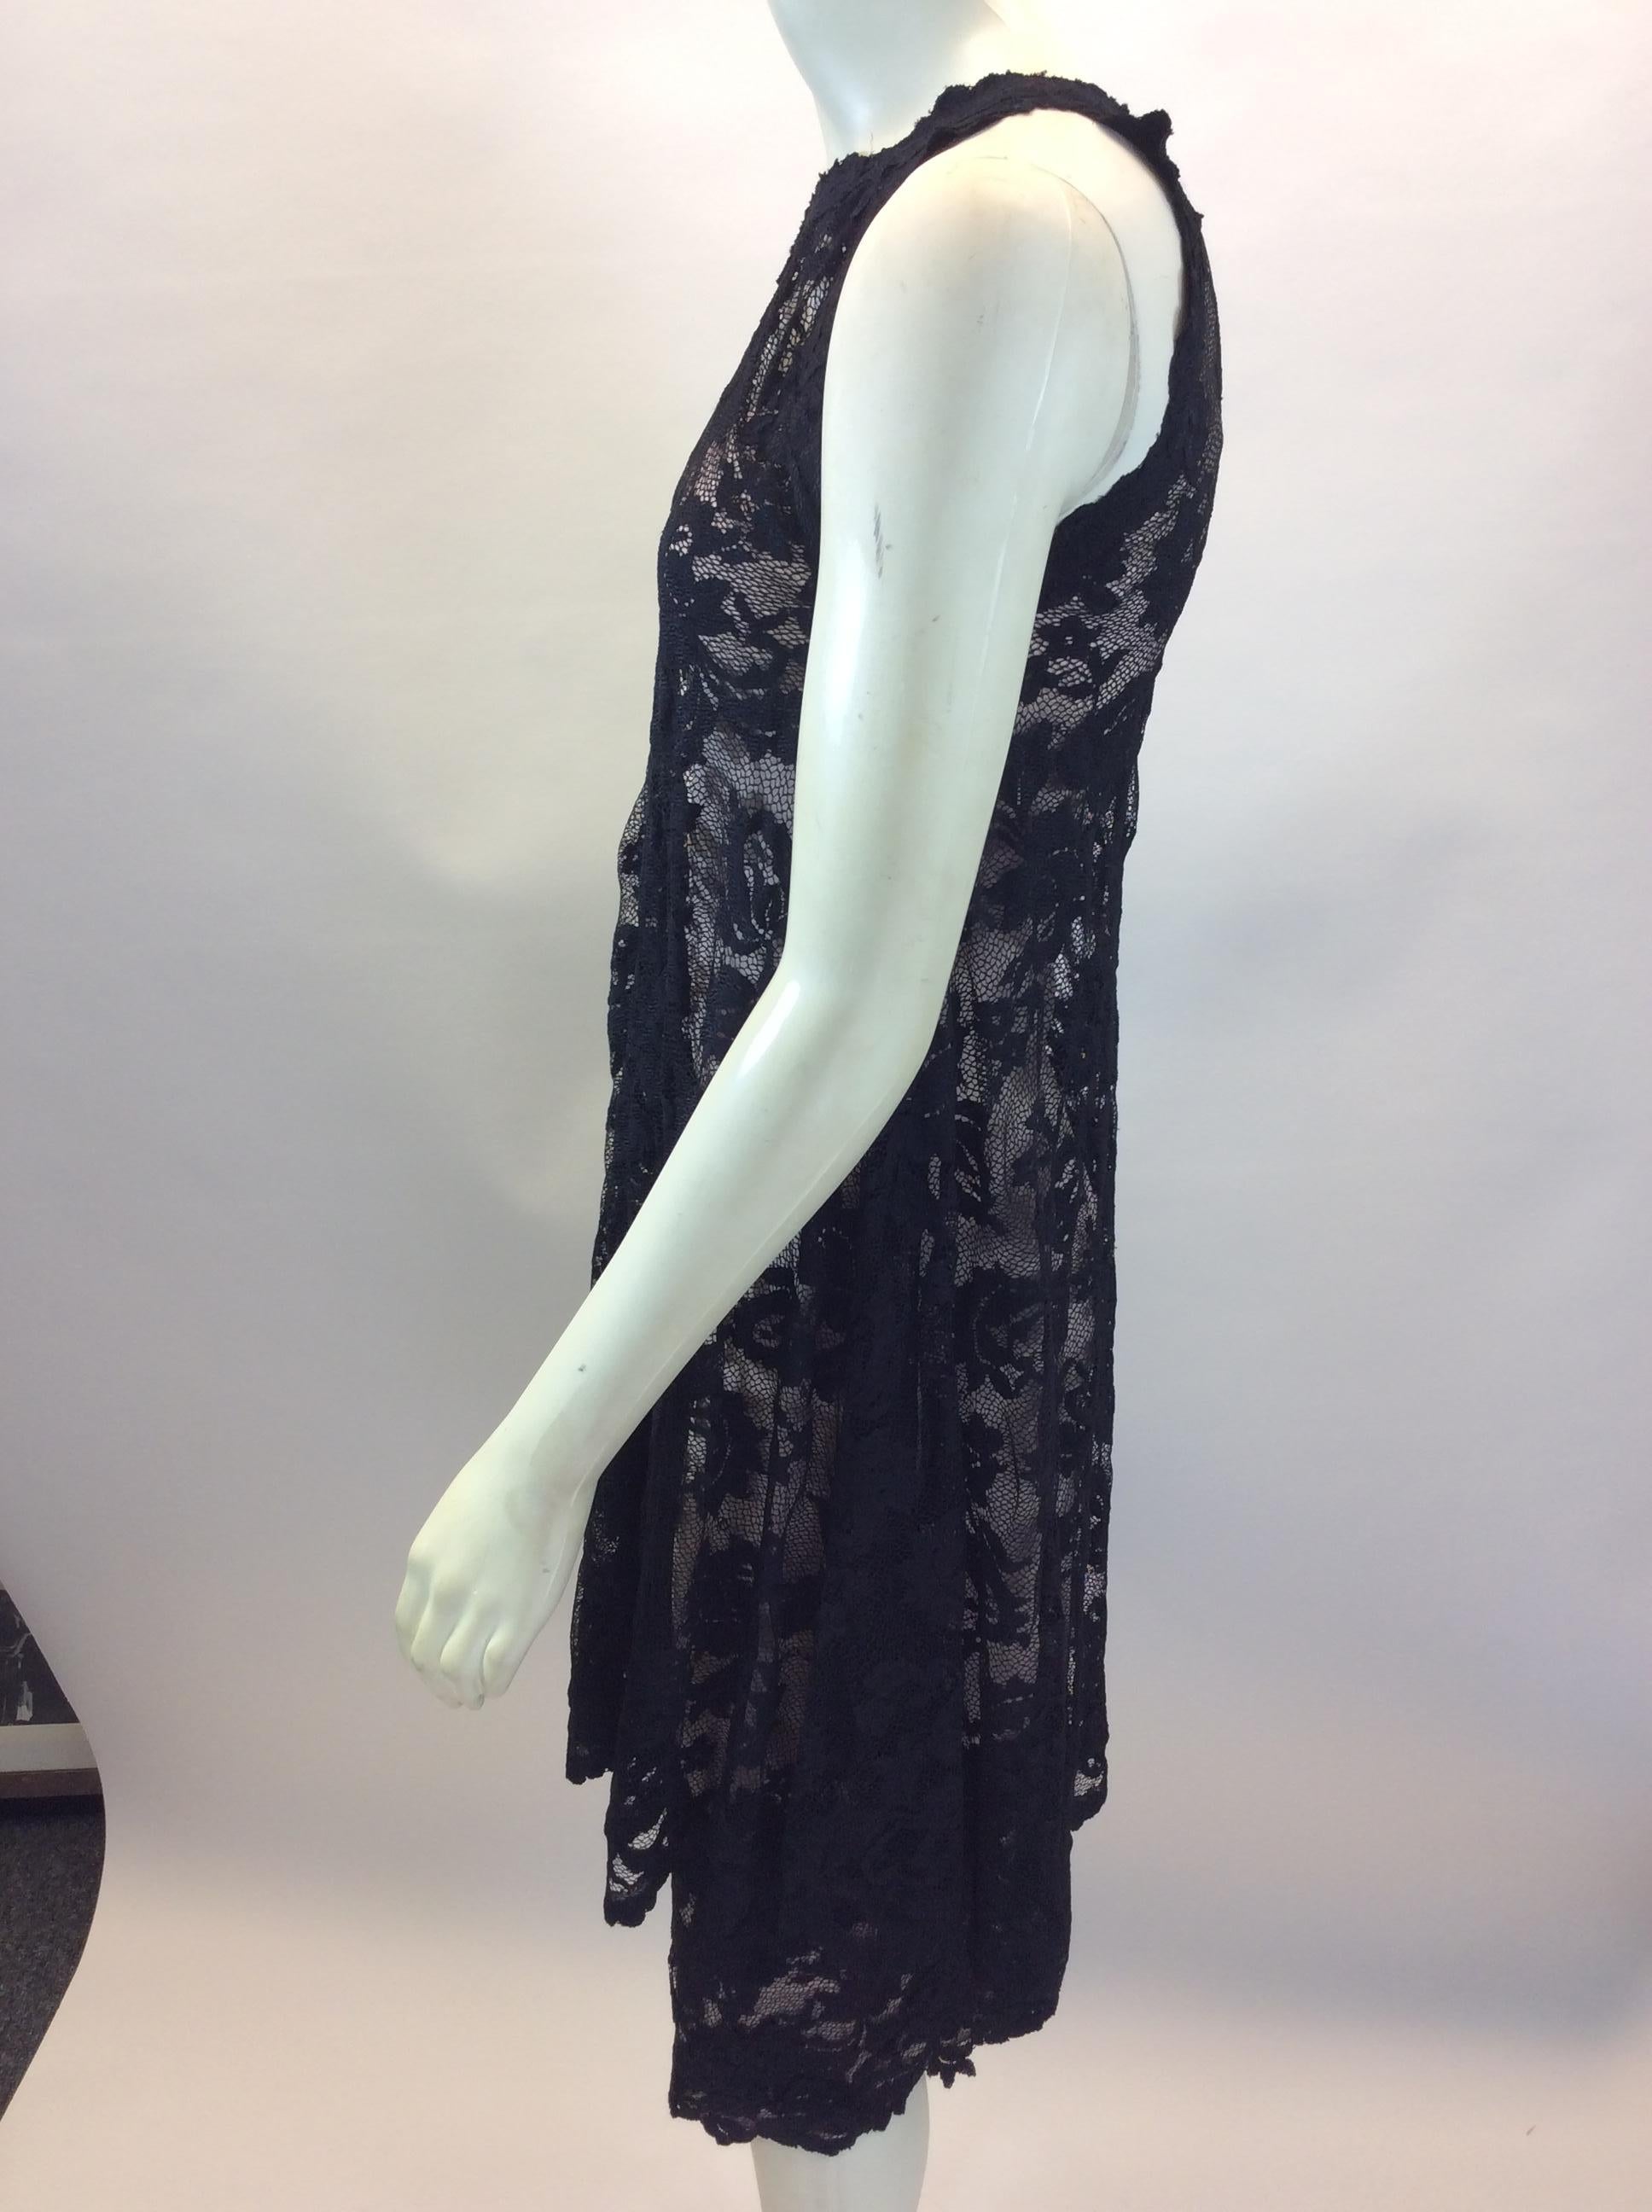 Olvi's Black Lace Dress
$299
Made in Ukraine
59% Polyamide, 29% Viscose, 12% Elastane
Size 1
Length 40